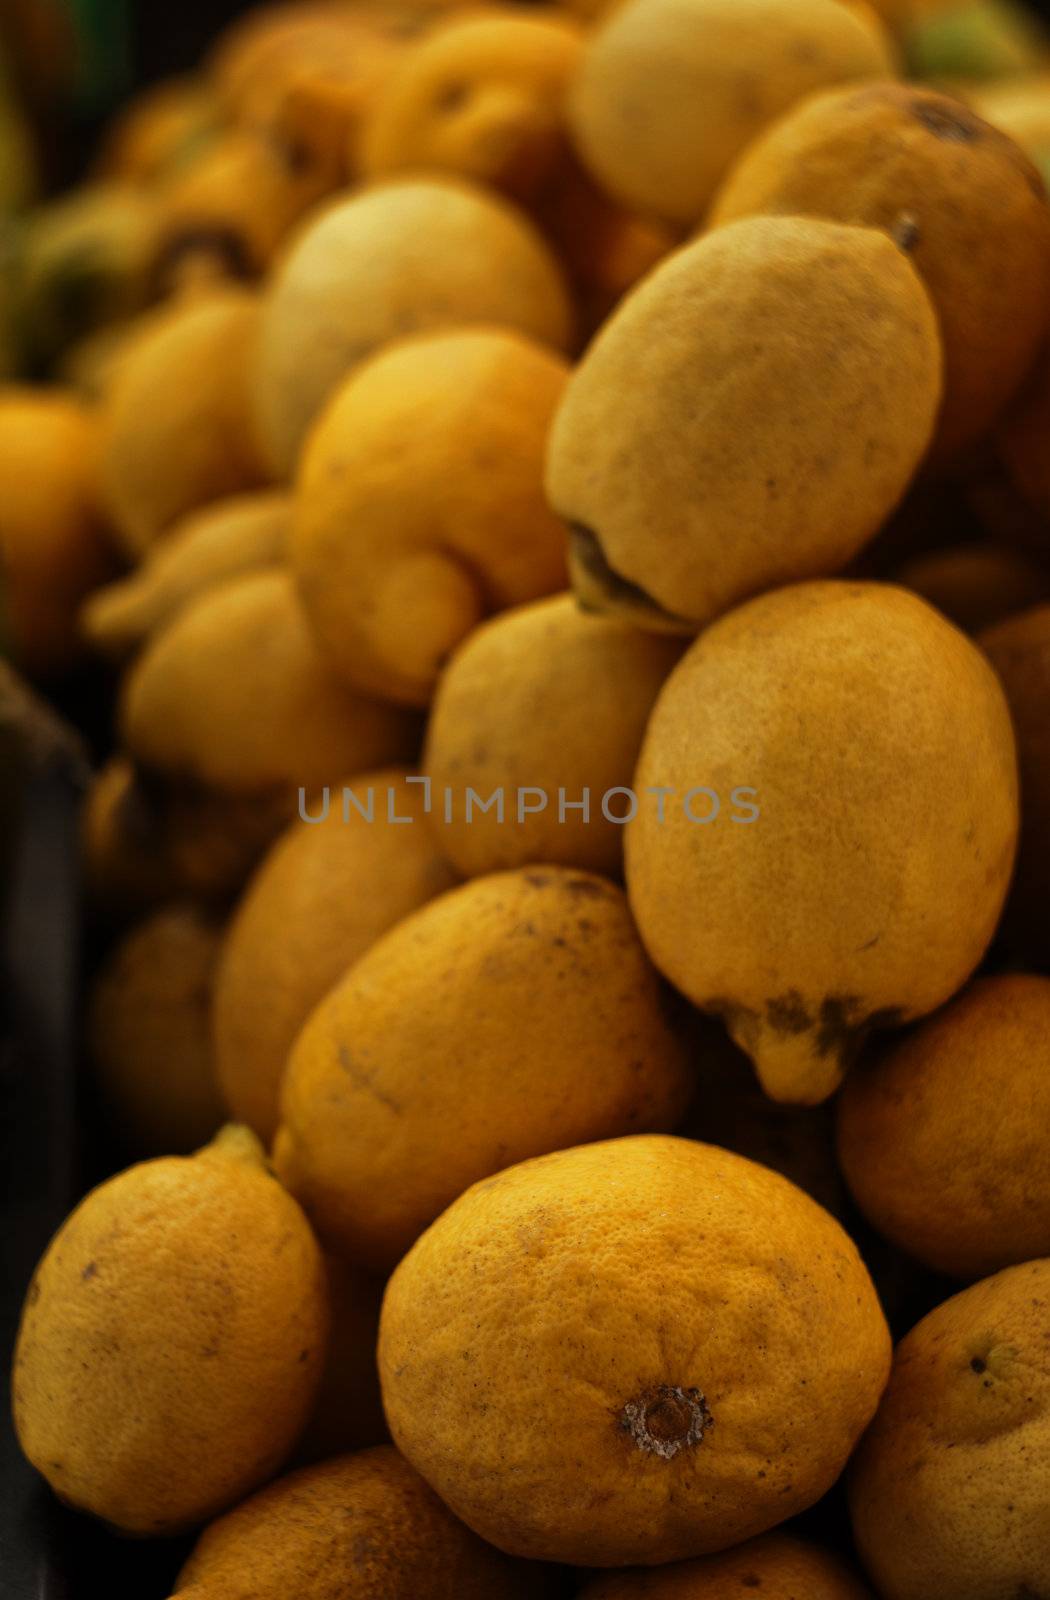 Group of fresh lemons on a market